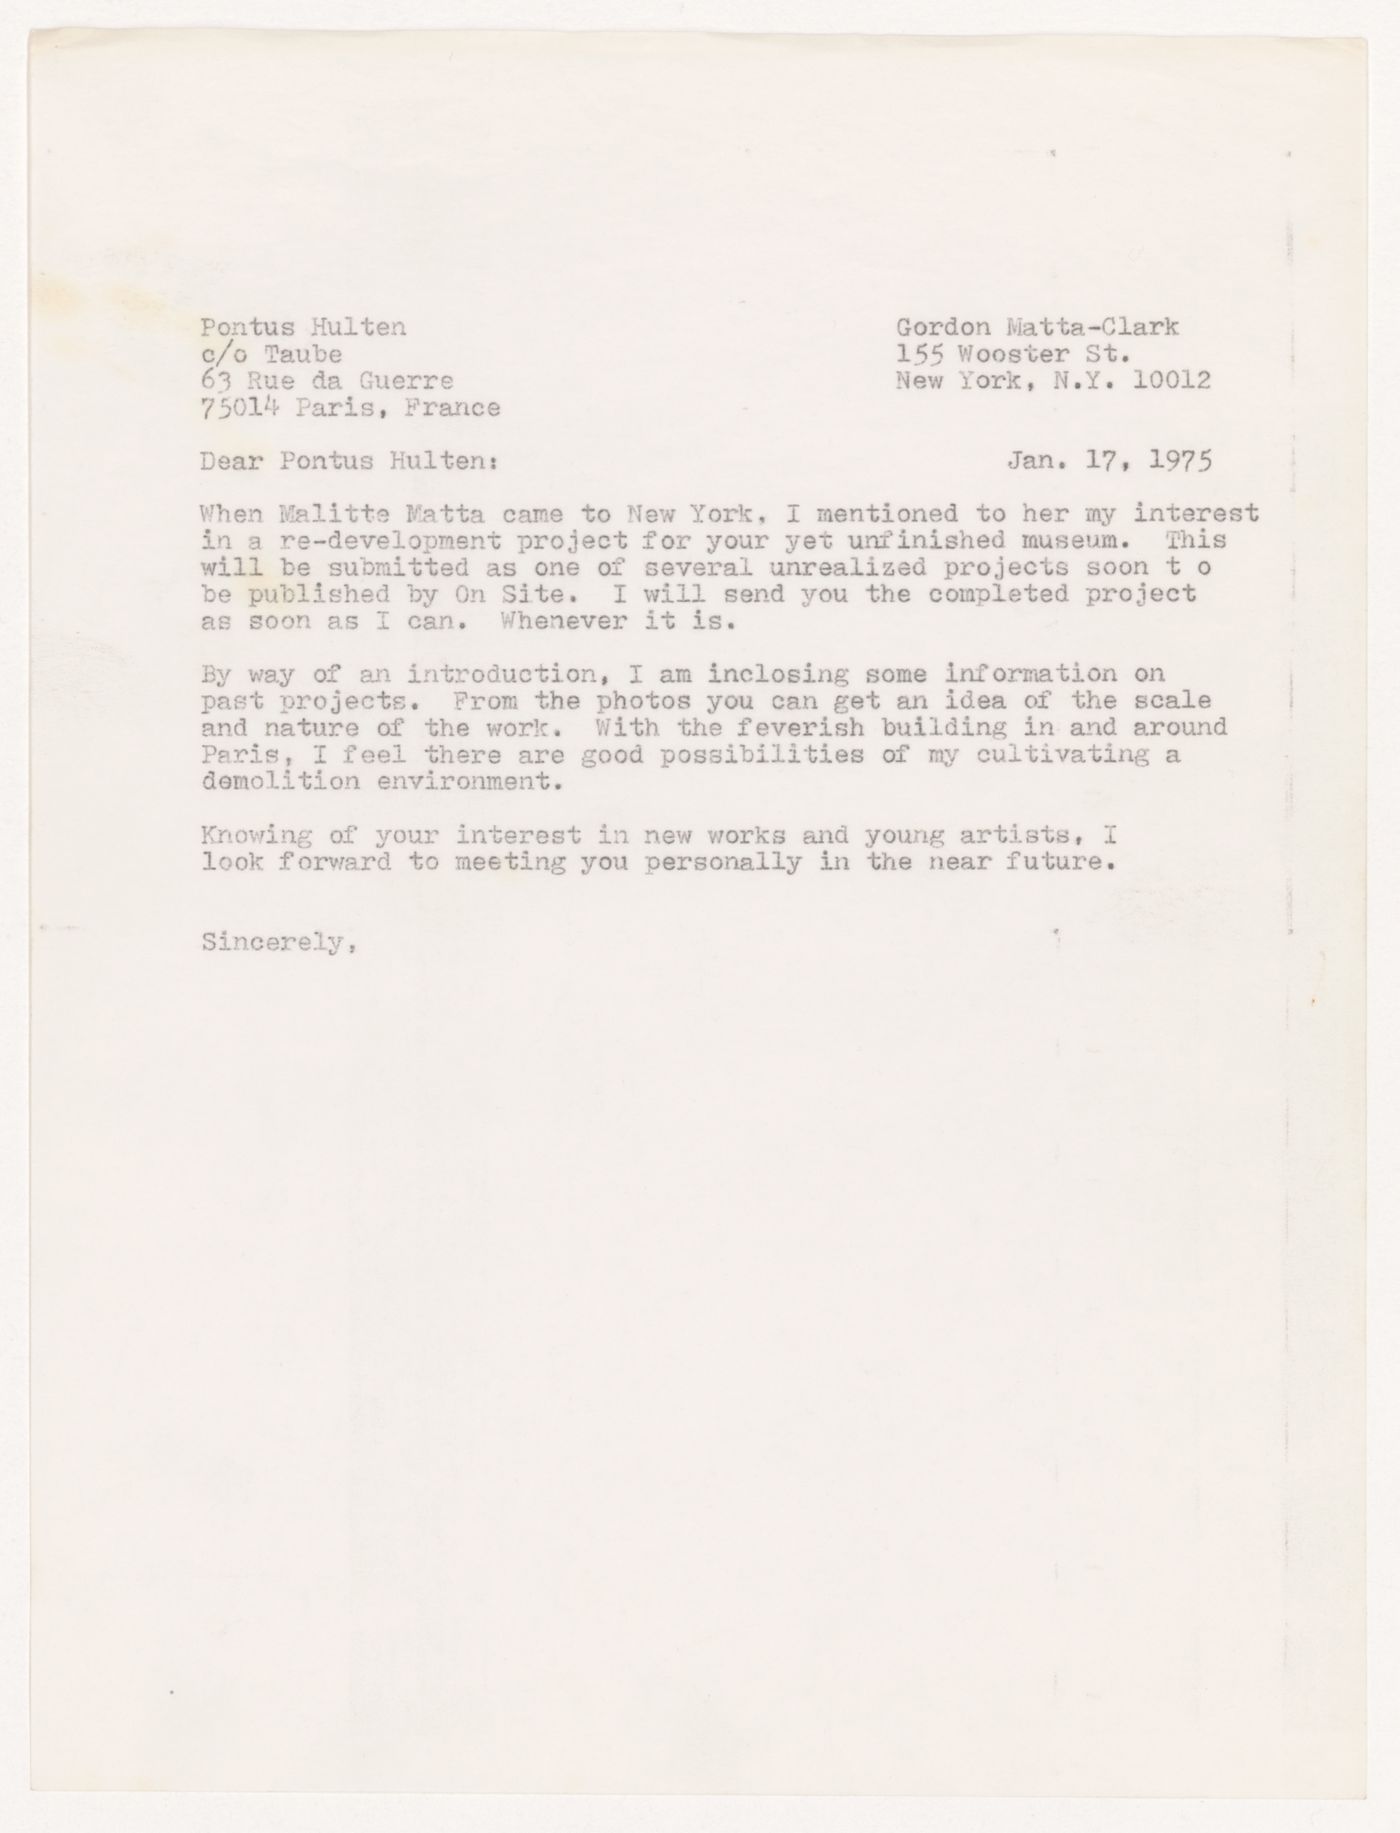 Letter from Gordon Matta-Clark to Pontus Hulten